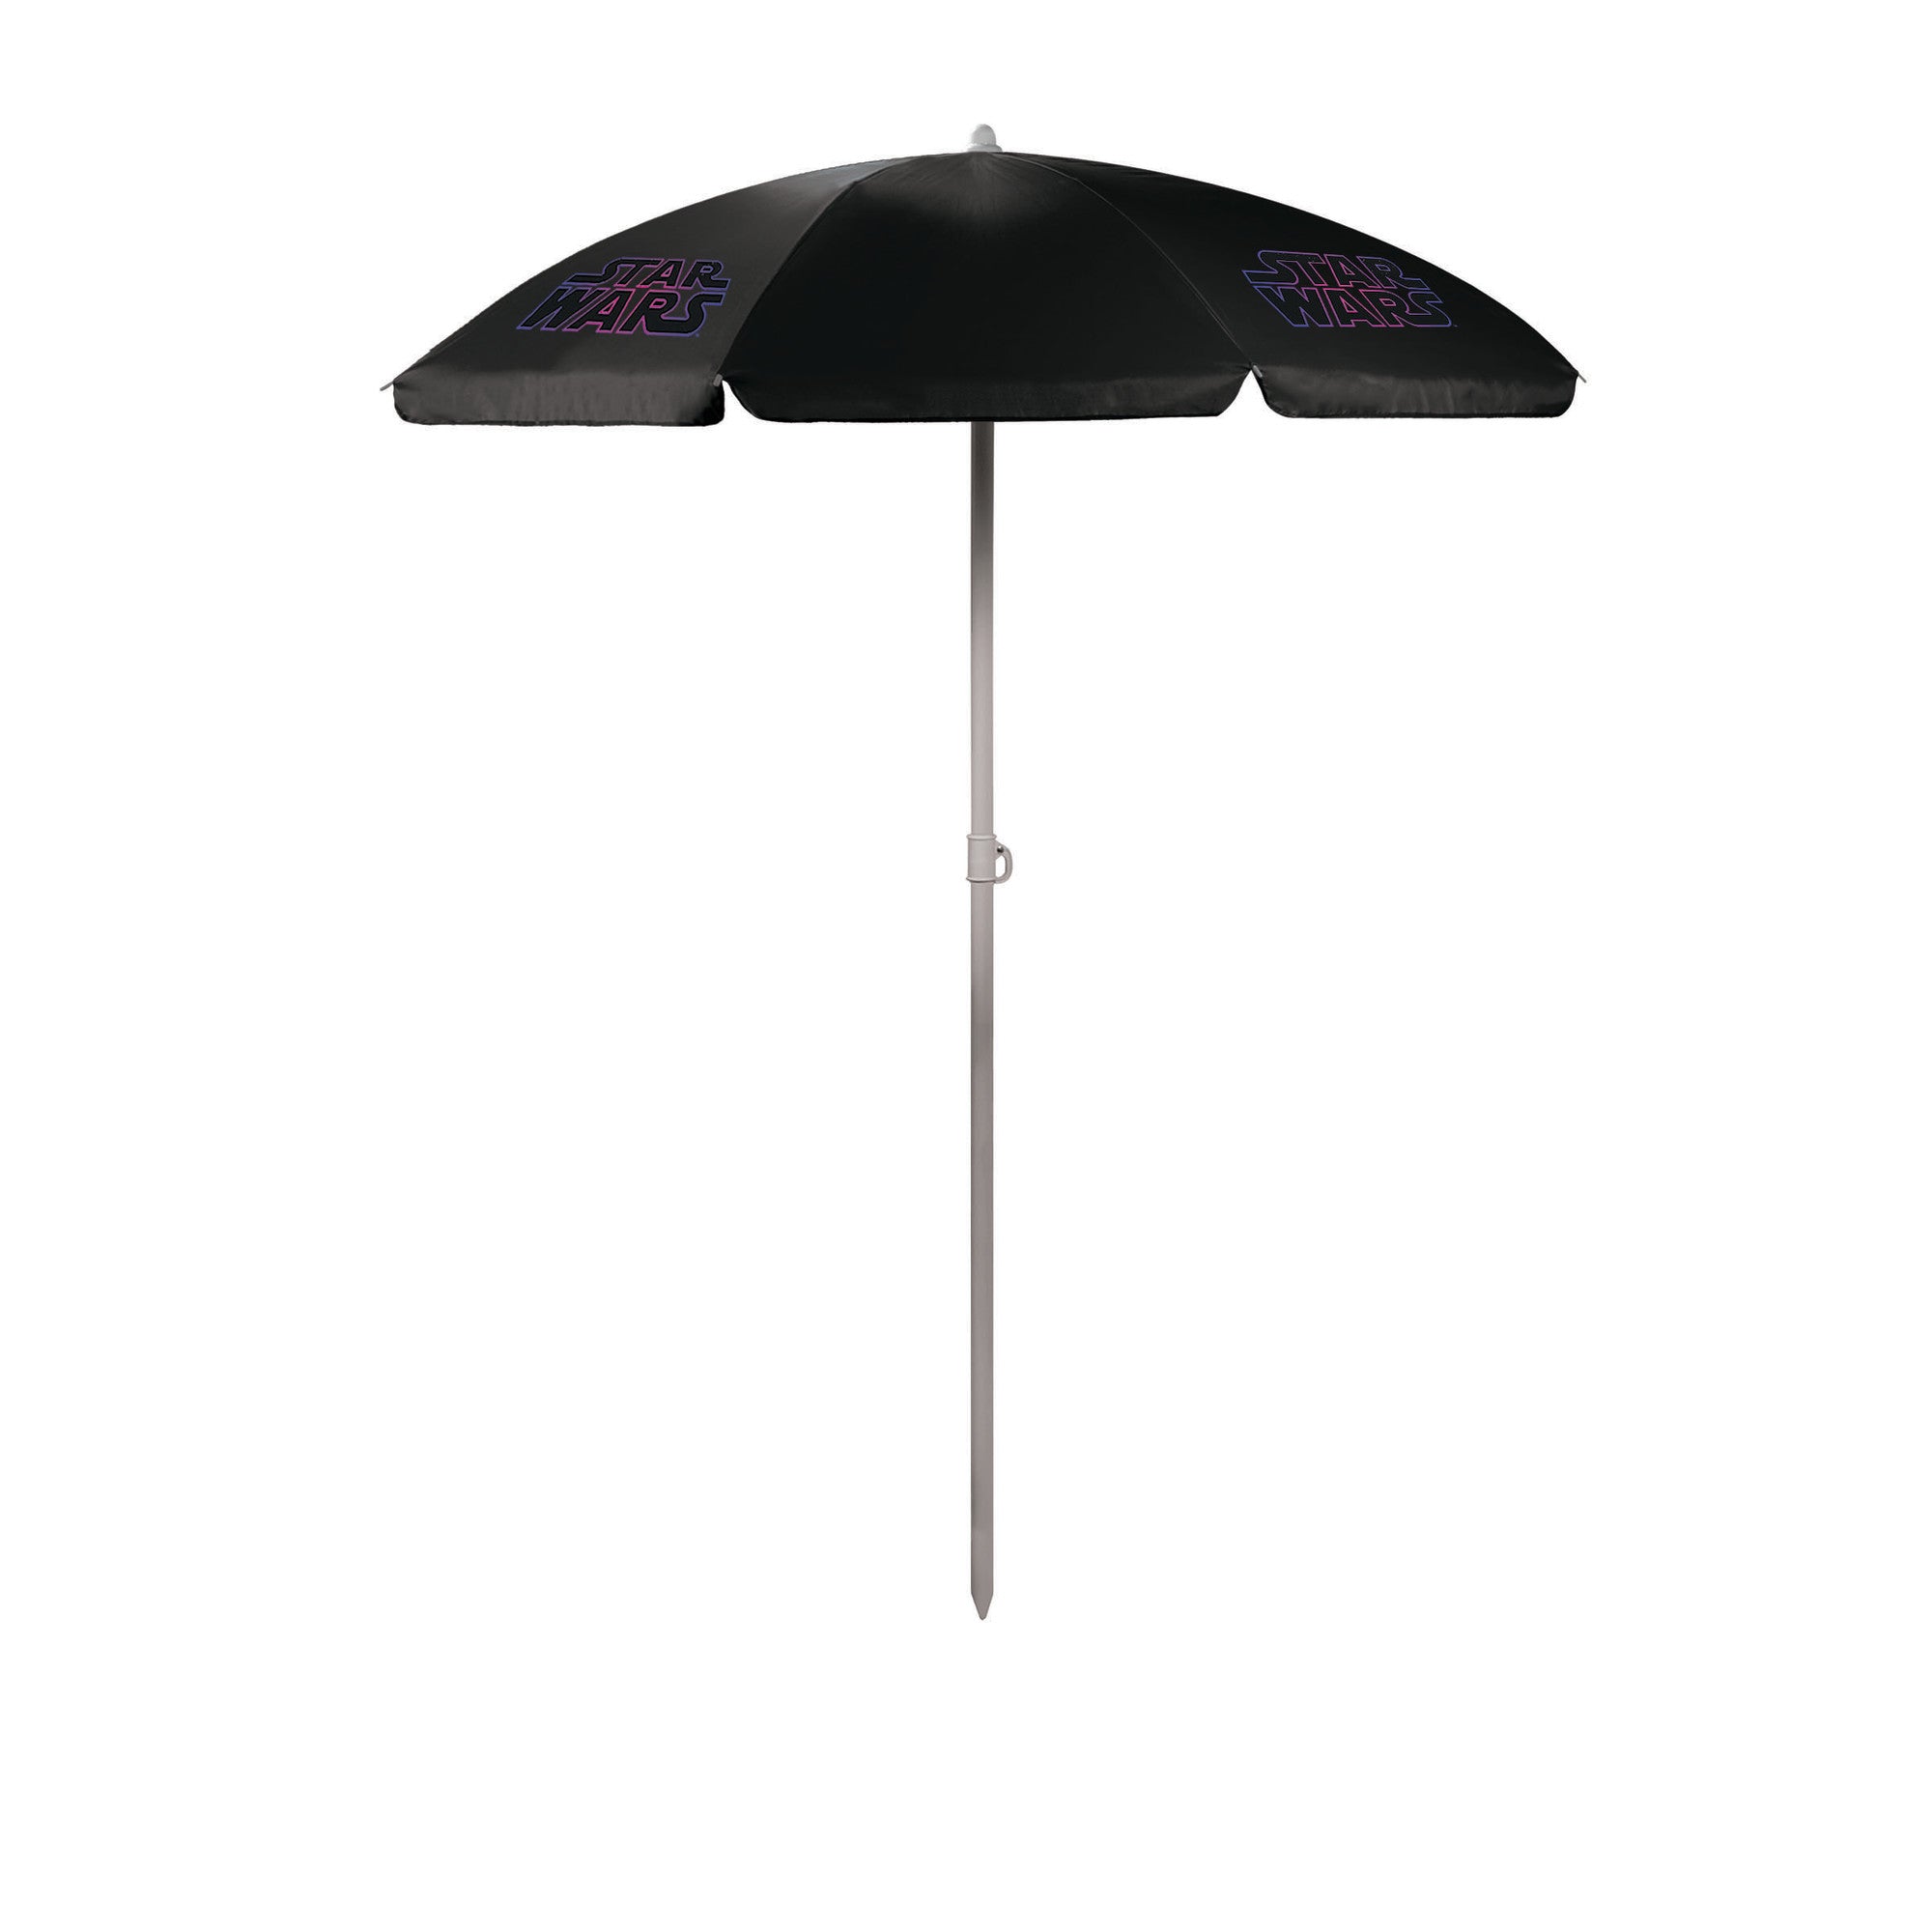 Star Wars - 5.5 Ft. Portable Beach Umbrella